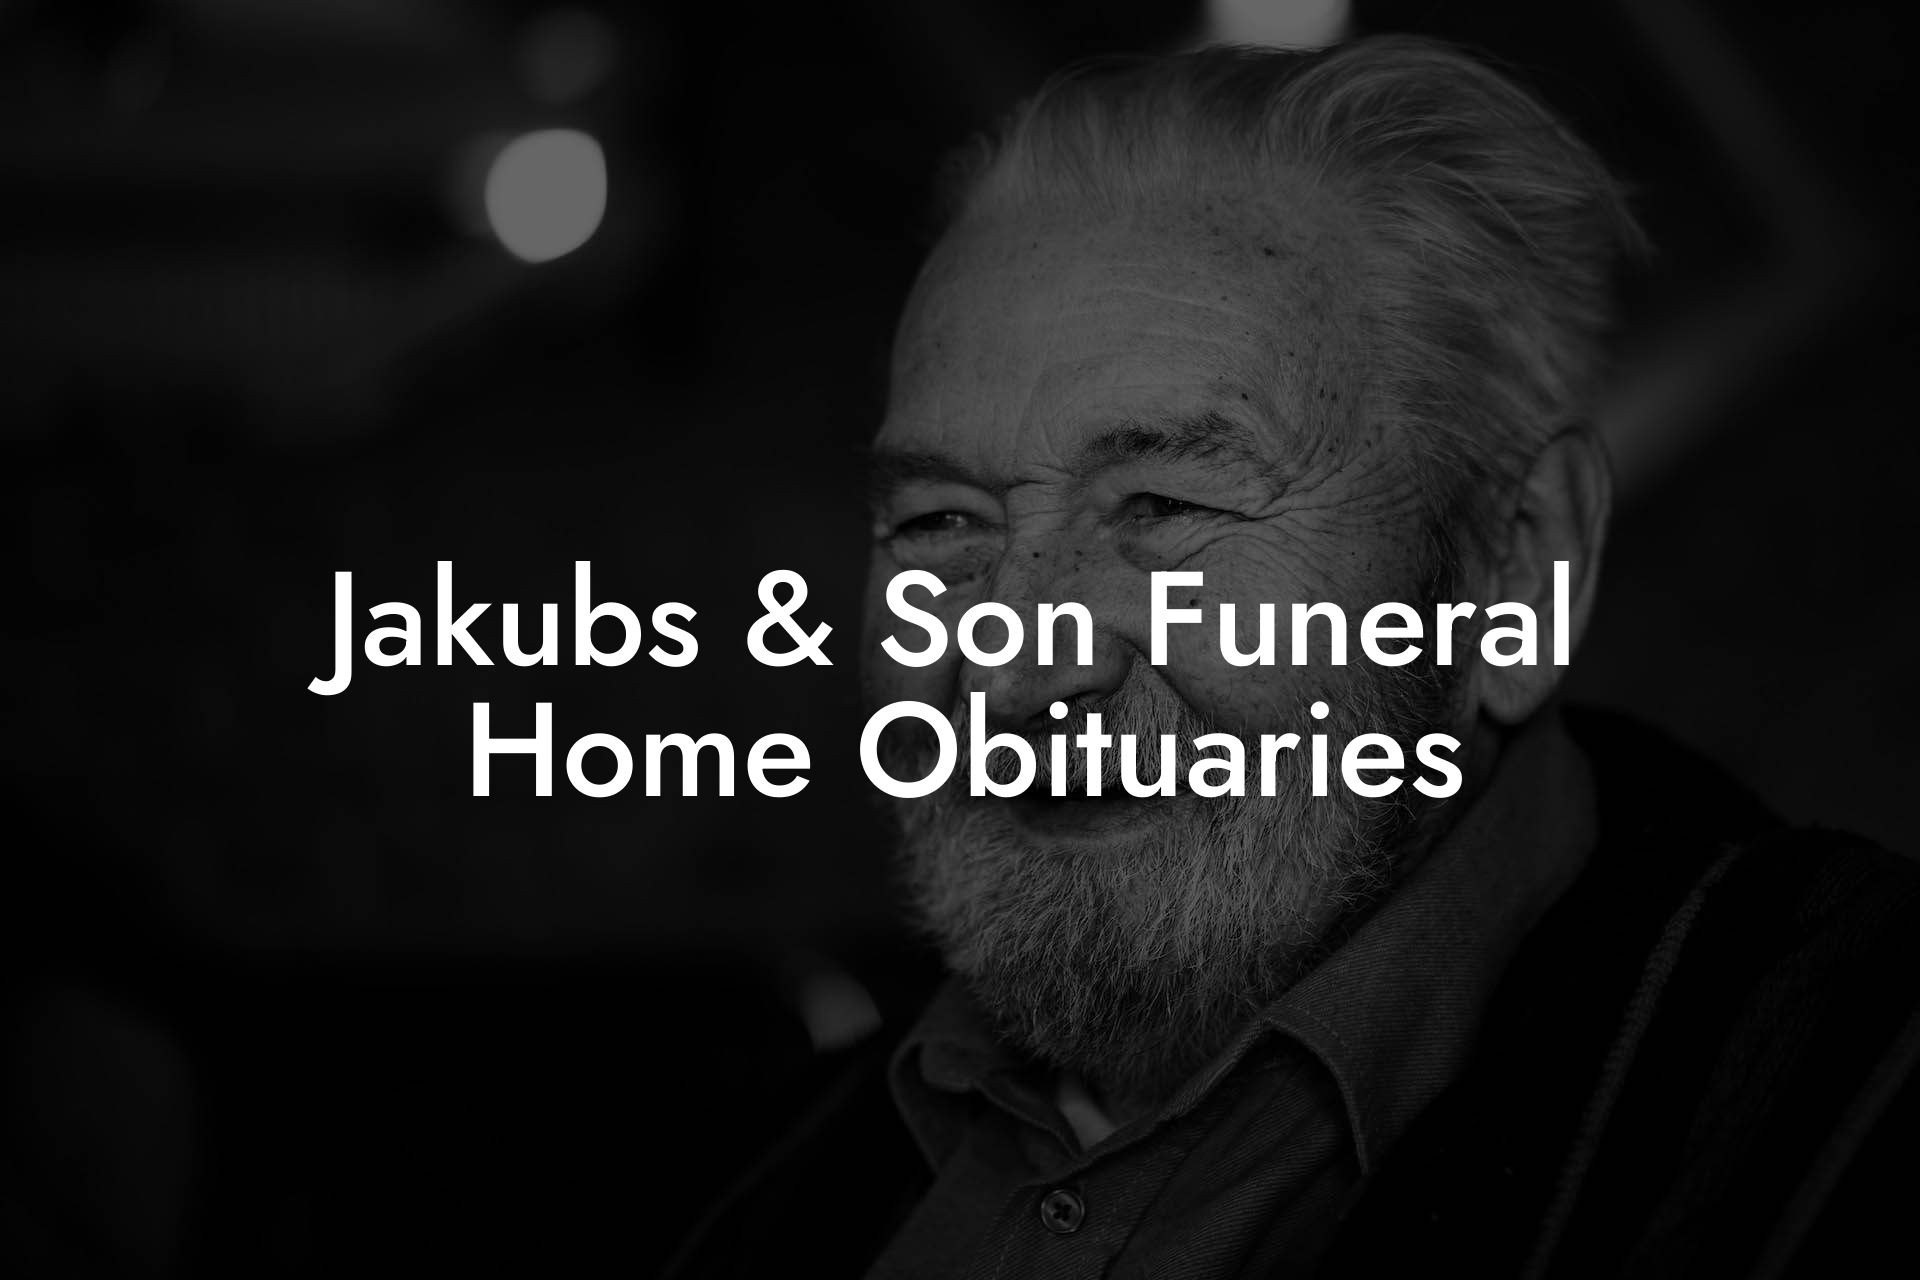 Jakubs & Son Funeral Home Obituaries